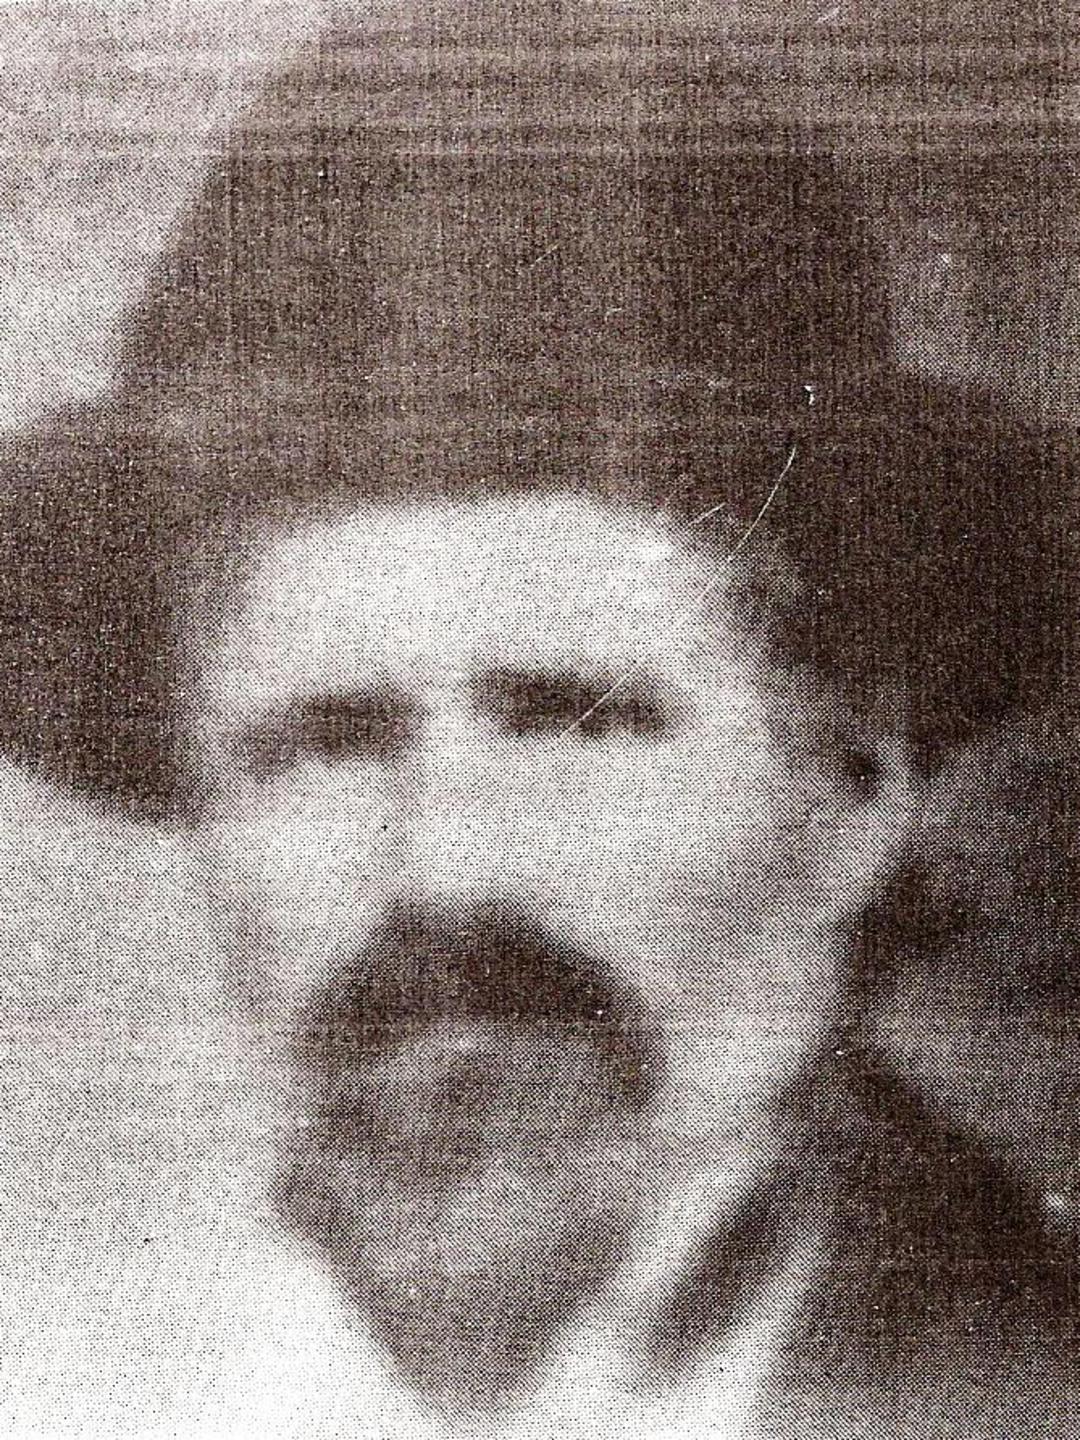 William James Hunting (1838 - 1916) Profile